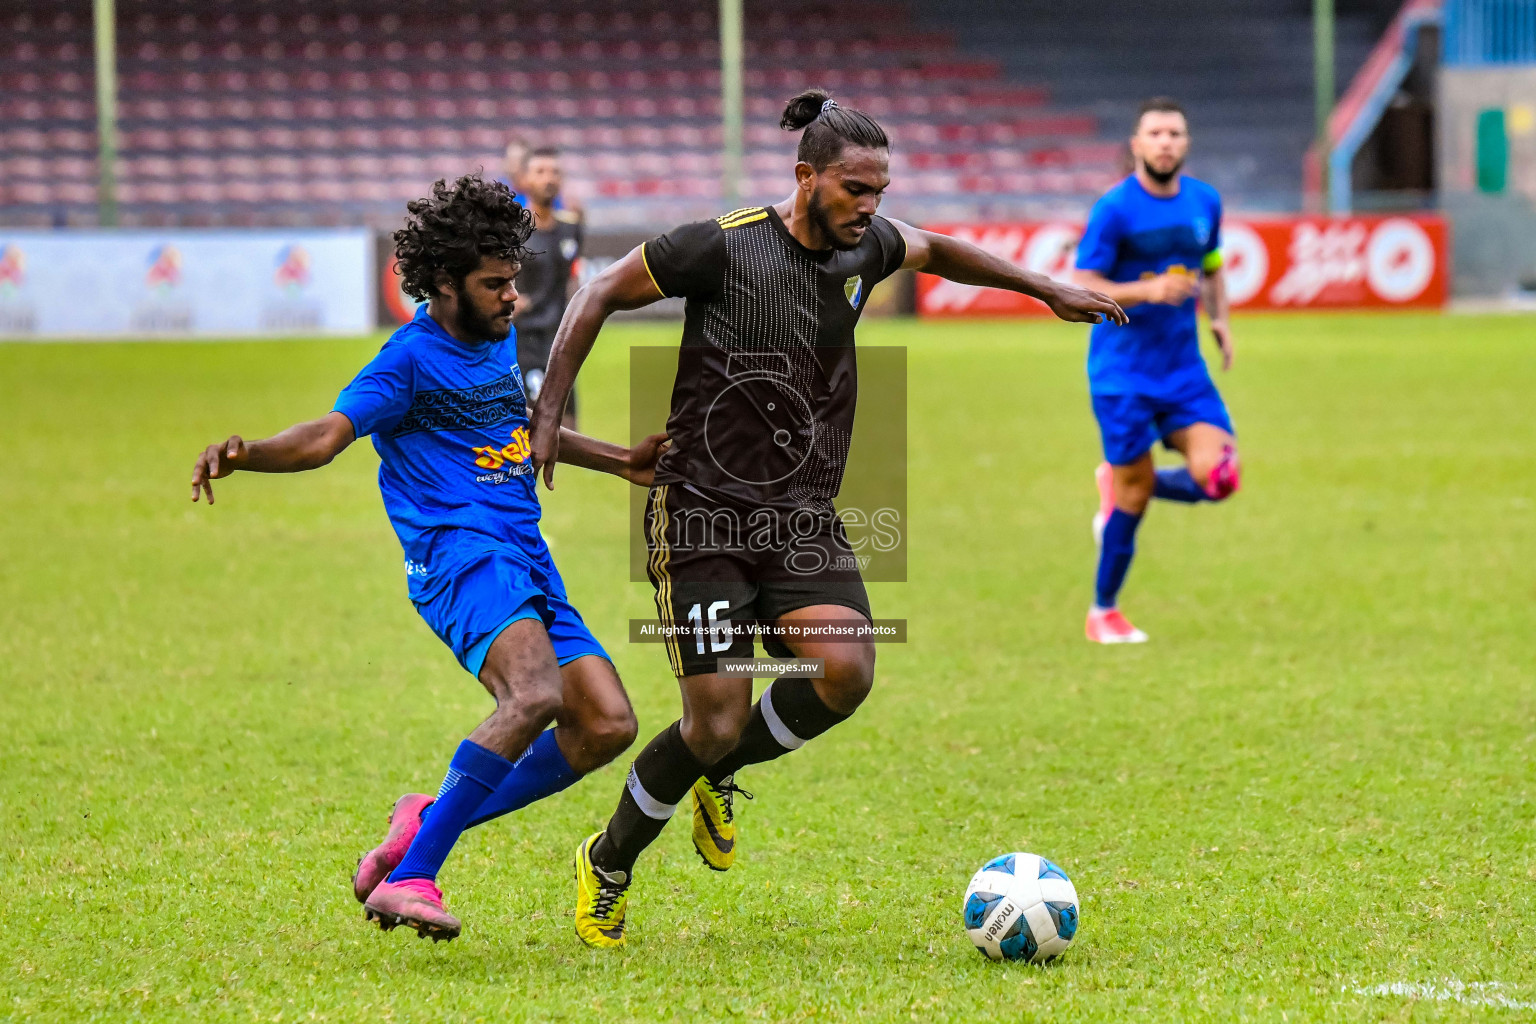 Dhivehi Sifainge Club ( DSC ) vs Kuda henveiru united in the 2nd Division 2022 on 29th July 2022, held in National Football Stadium, Male', Maldives Photos: Nausham Waheed / Images.mv